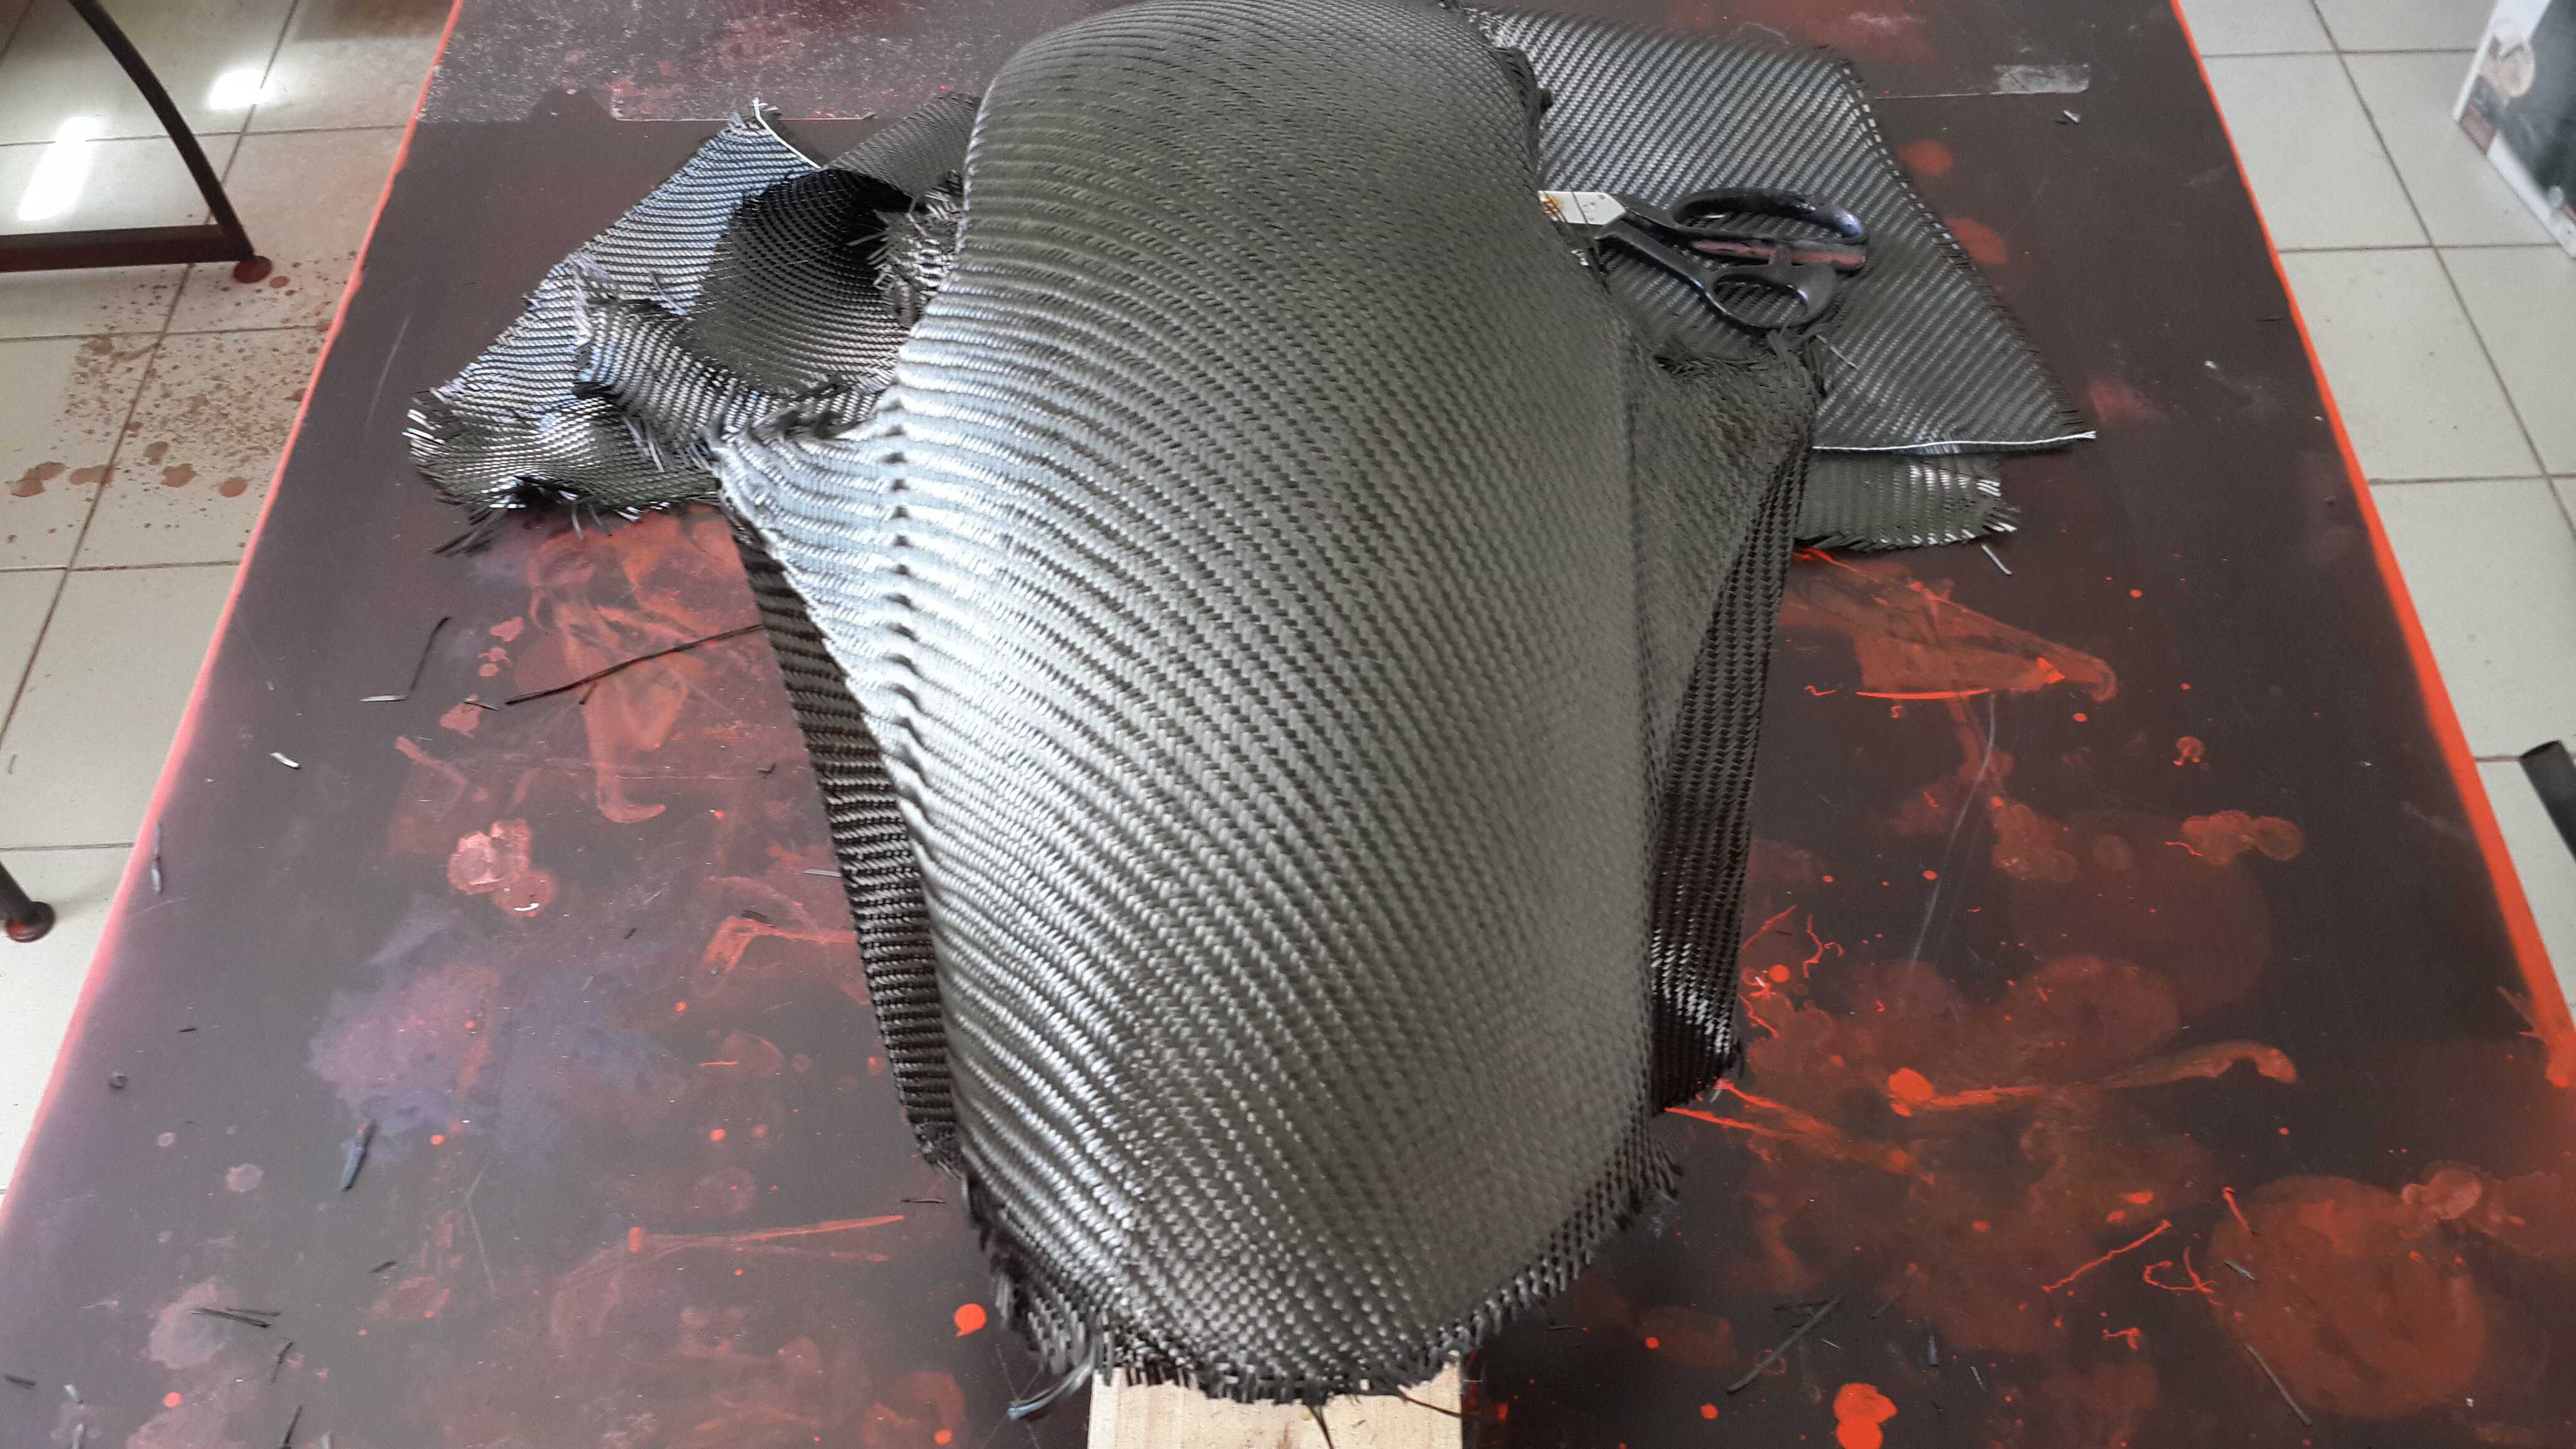 MULTITEX Composites.com - Starter kit for carbon fiber skinning